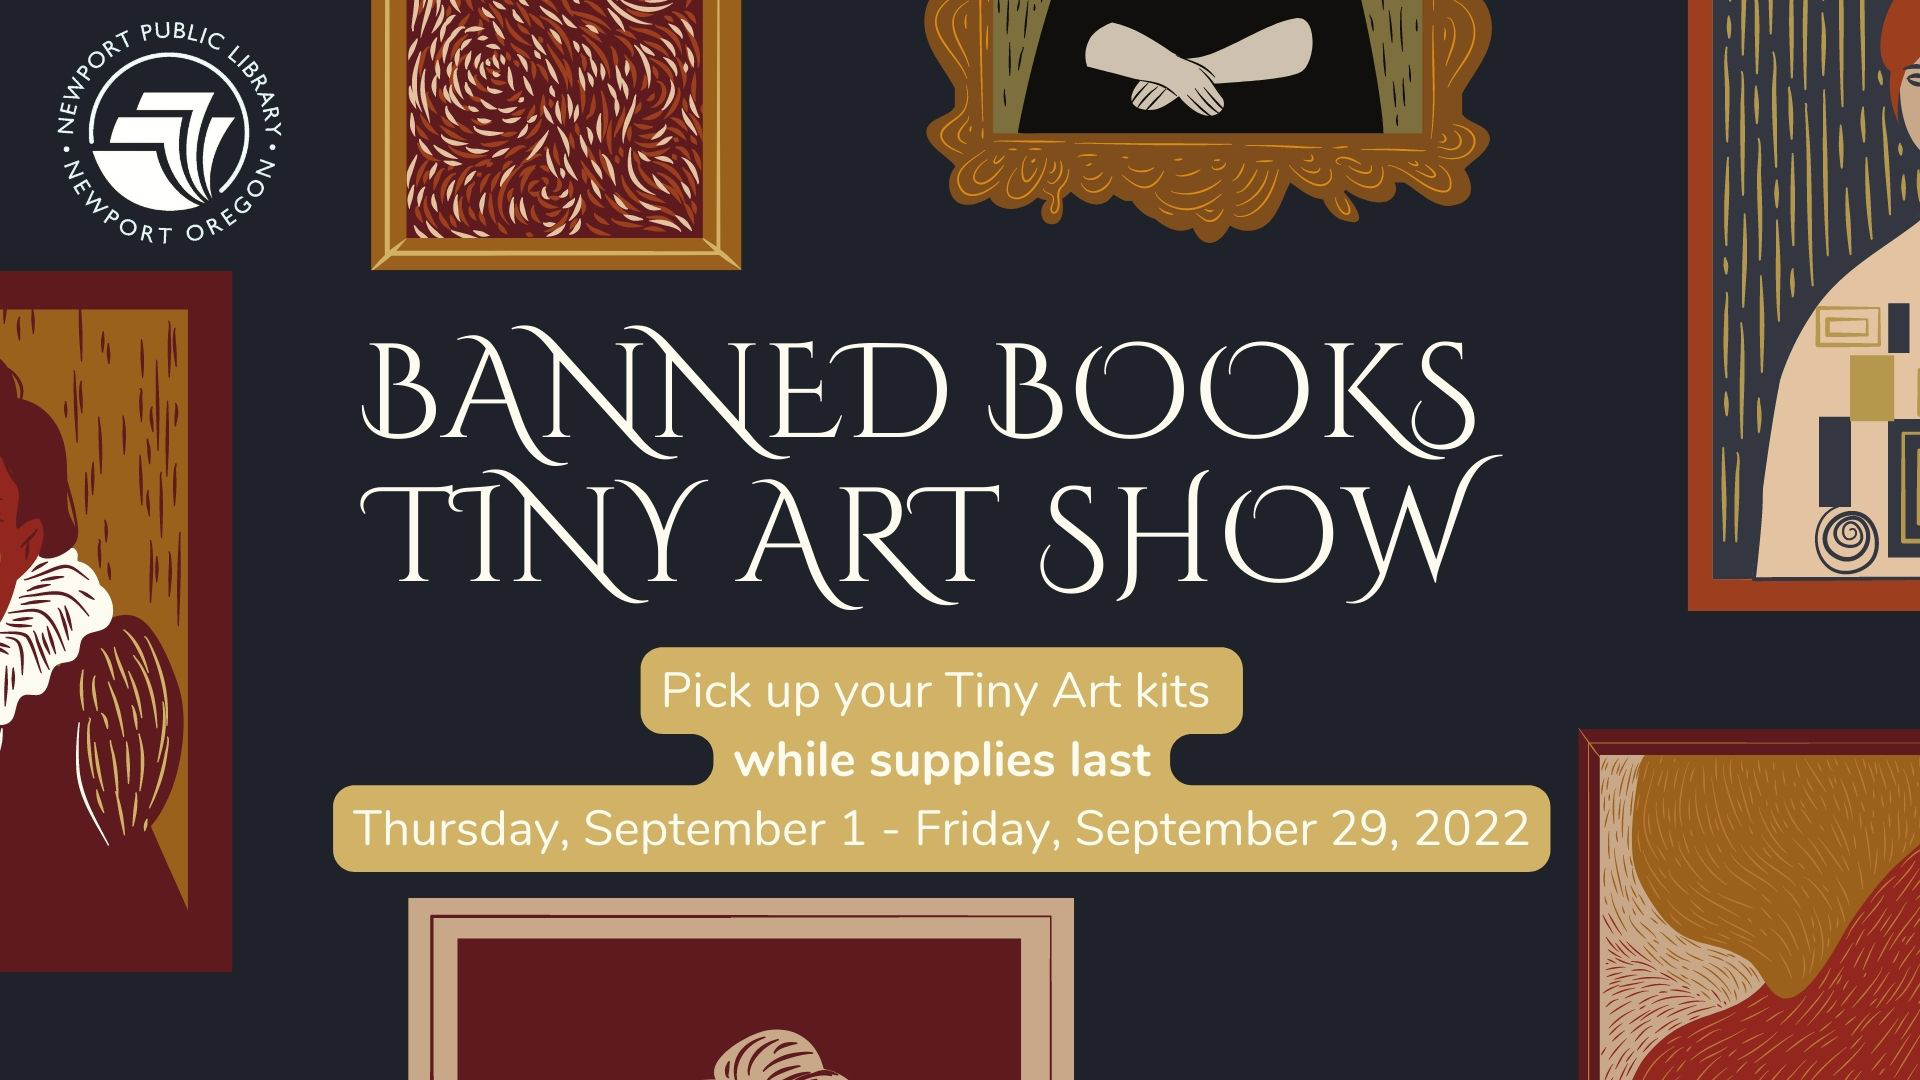 Tiny art show, pick up your kits 9/1/2022 through 9/19/2022.